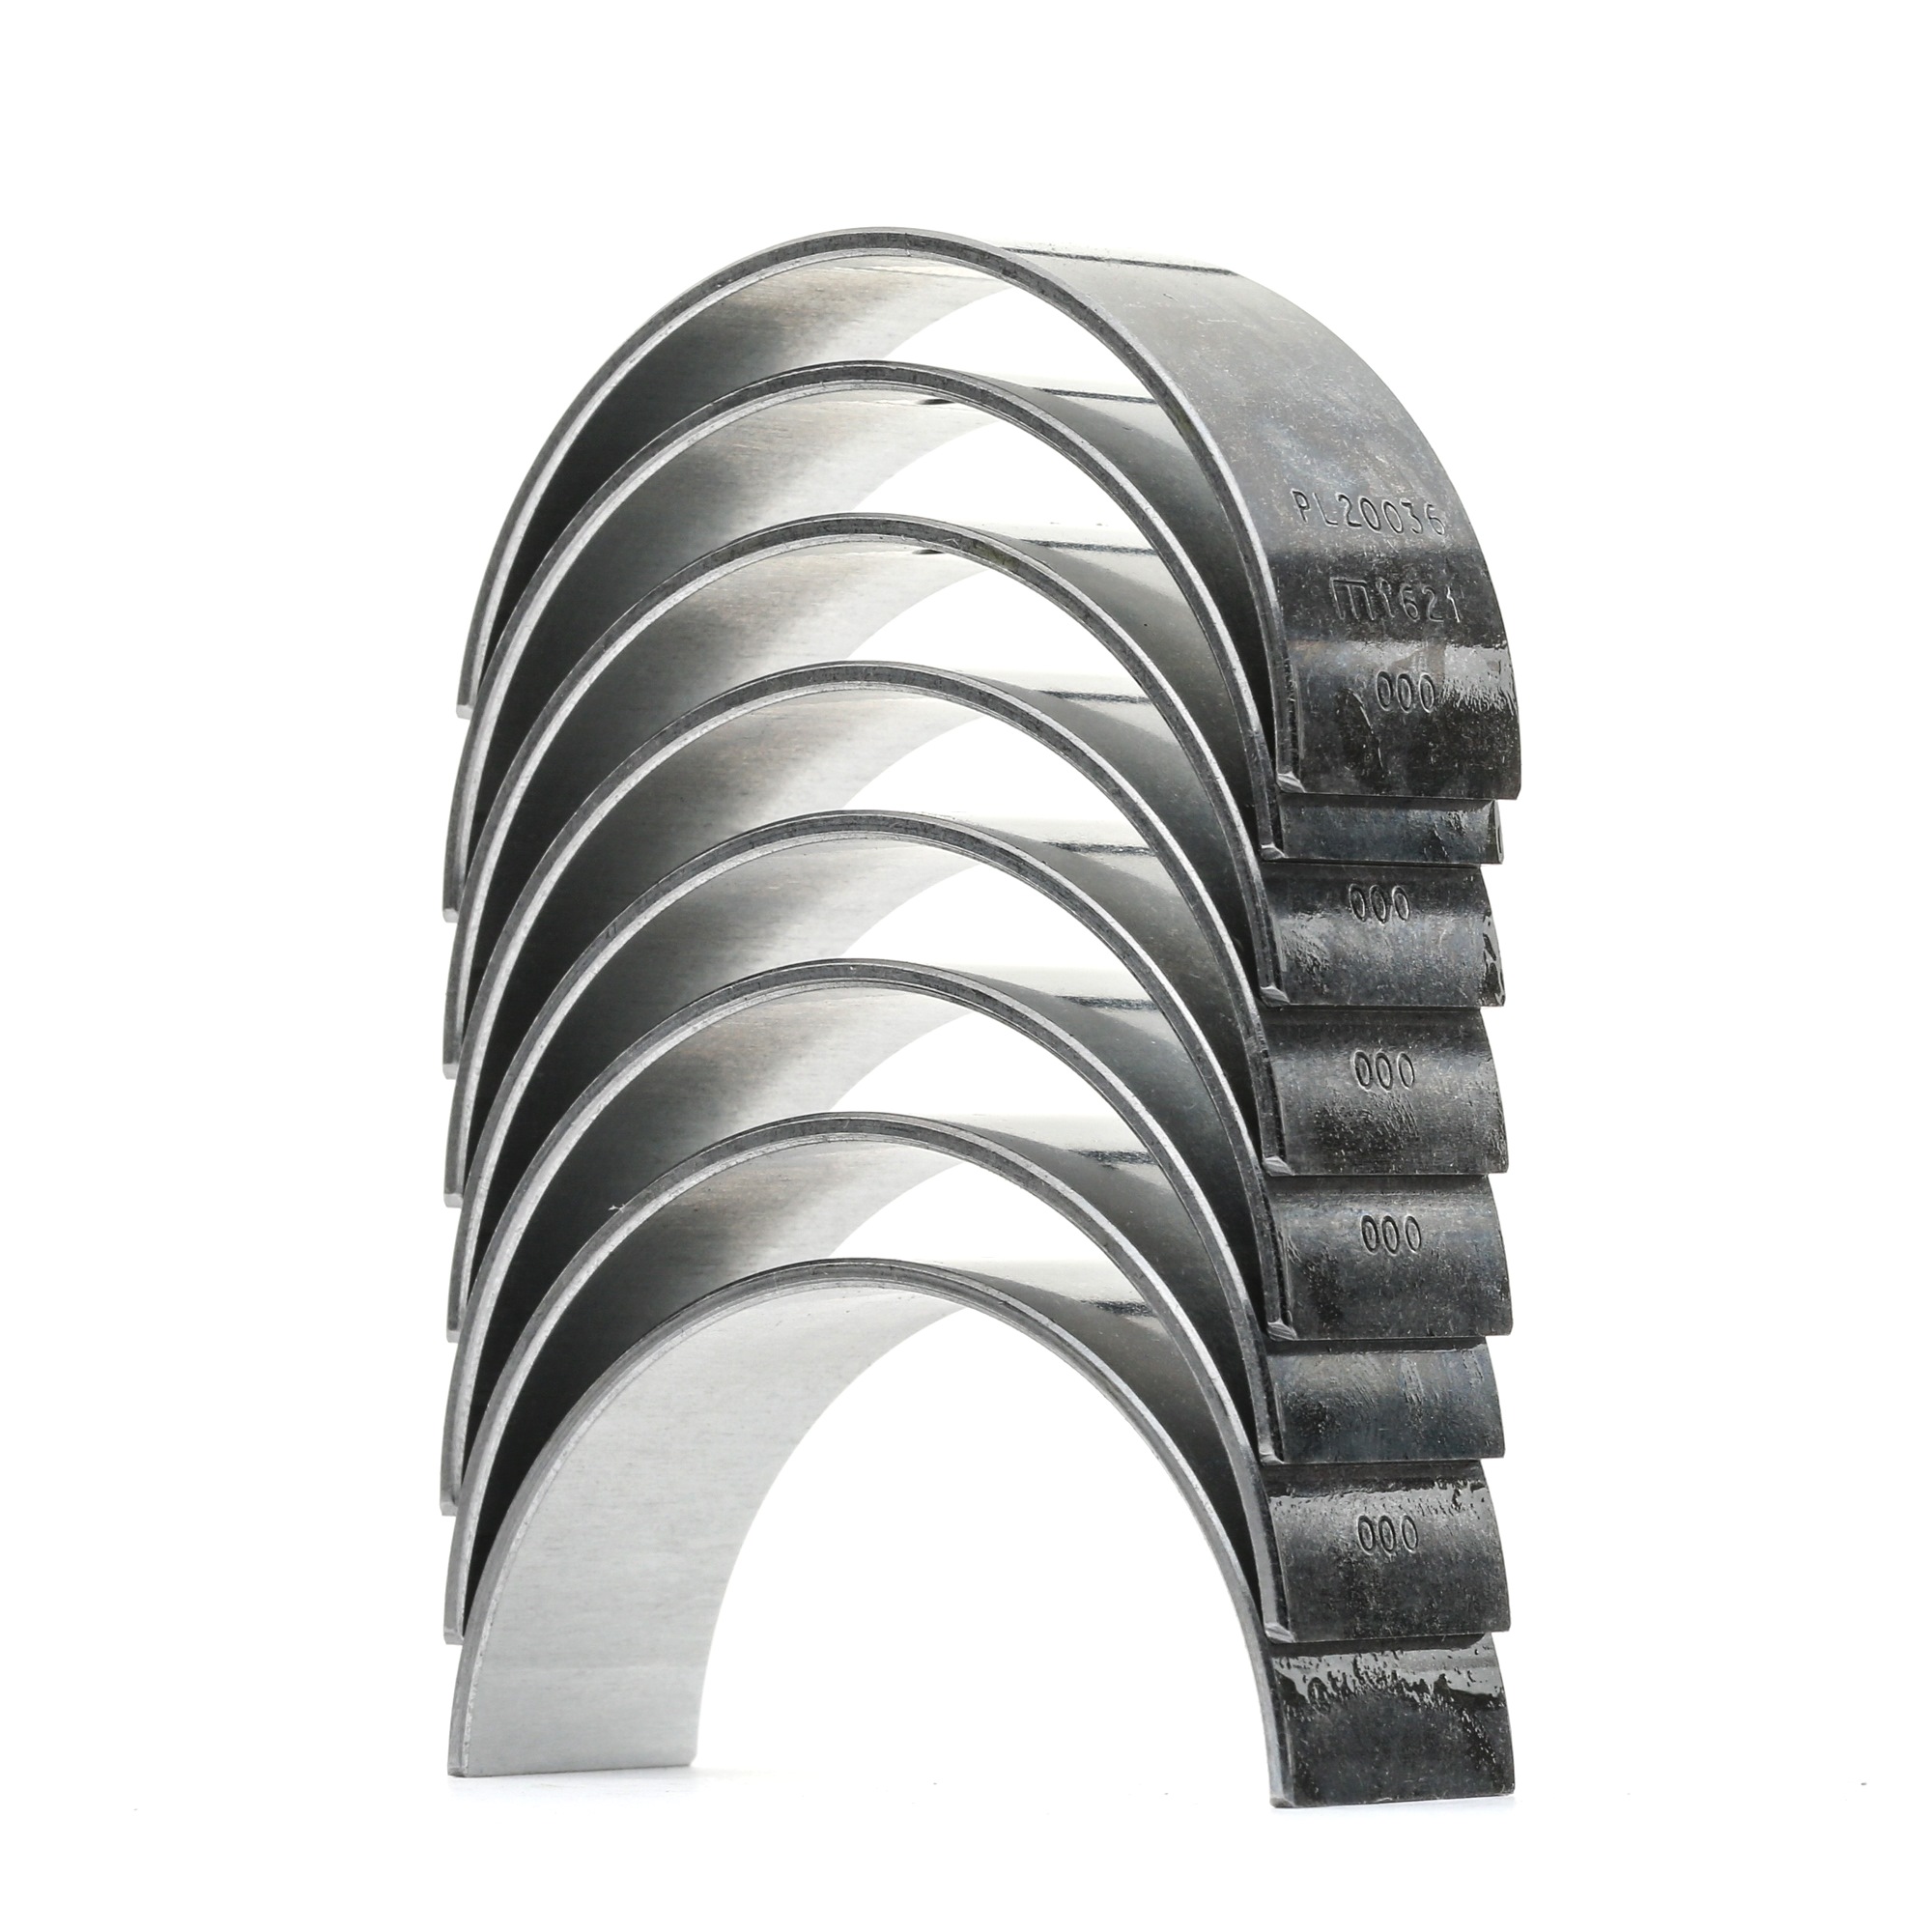 Skoda FELICIA Bearings parts - Conrod Bearing Set MAHLE ORIGINAL 029 PS 20037 000